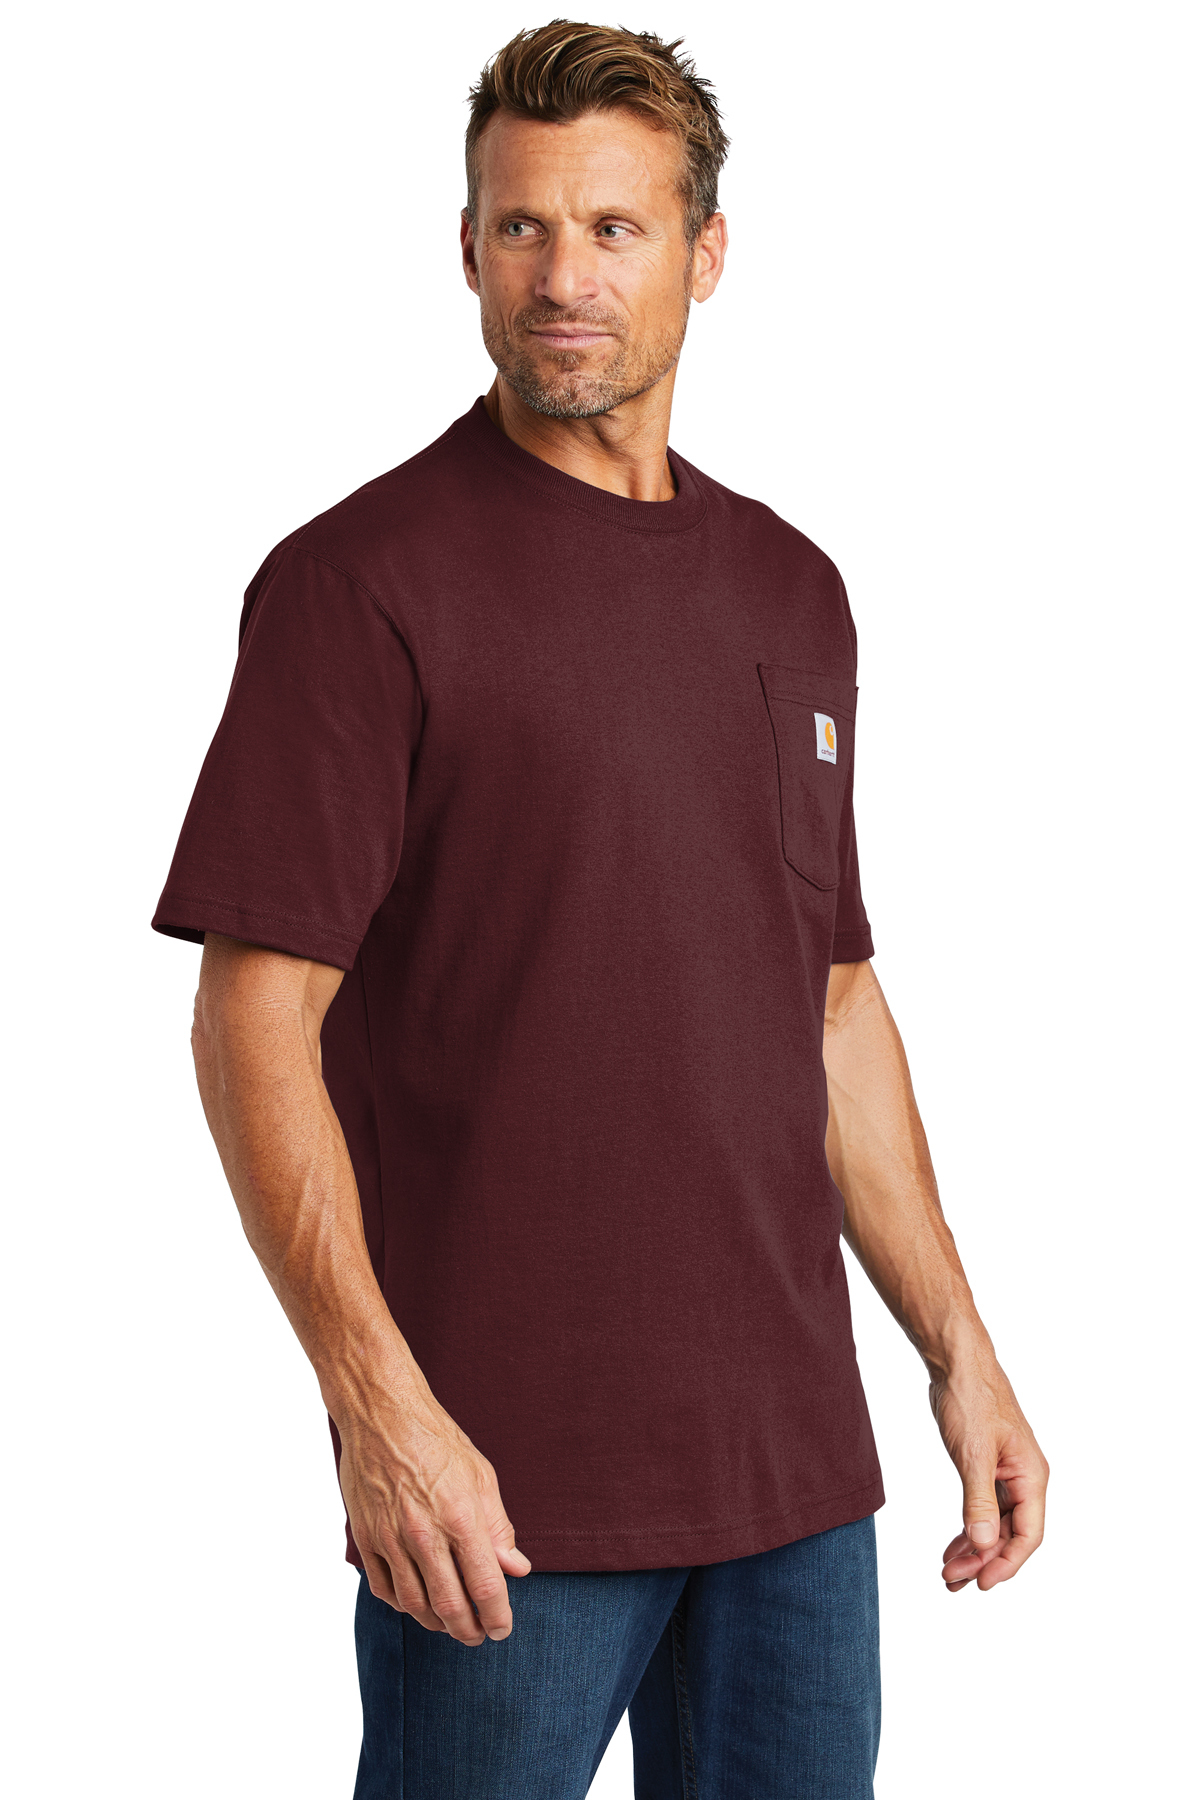 Carhartt Workwear Pocket Product SanMar | Short Sleeve | T-Shirt